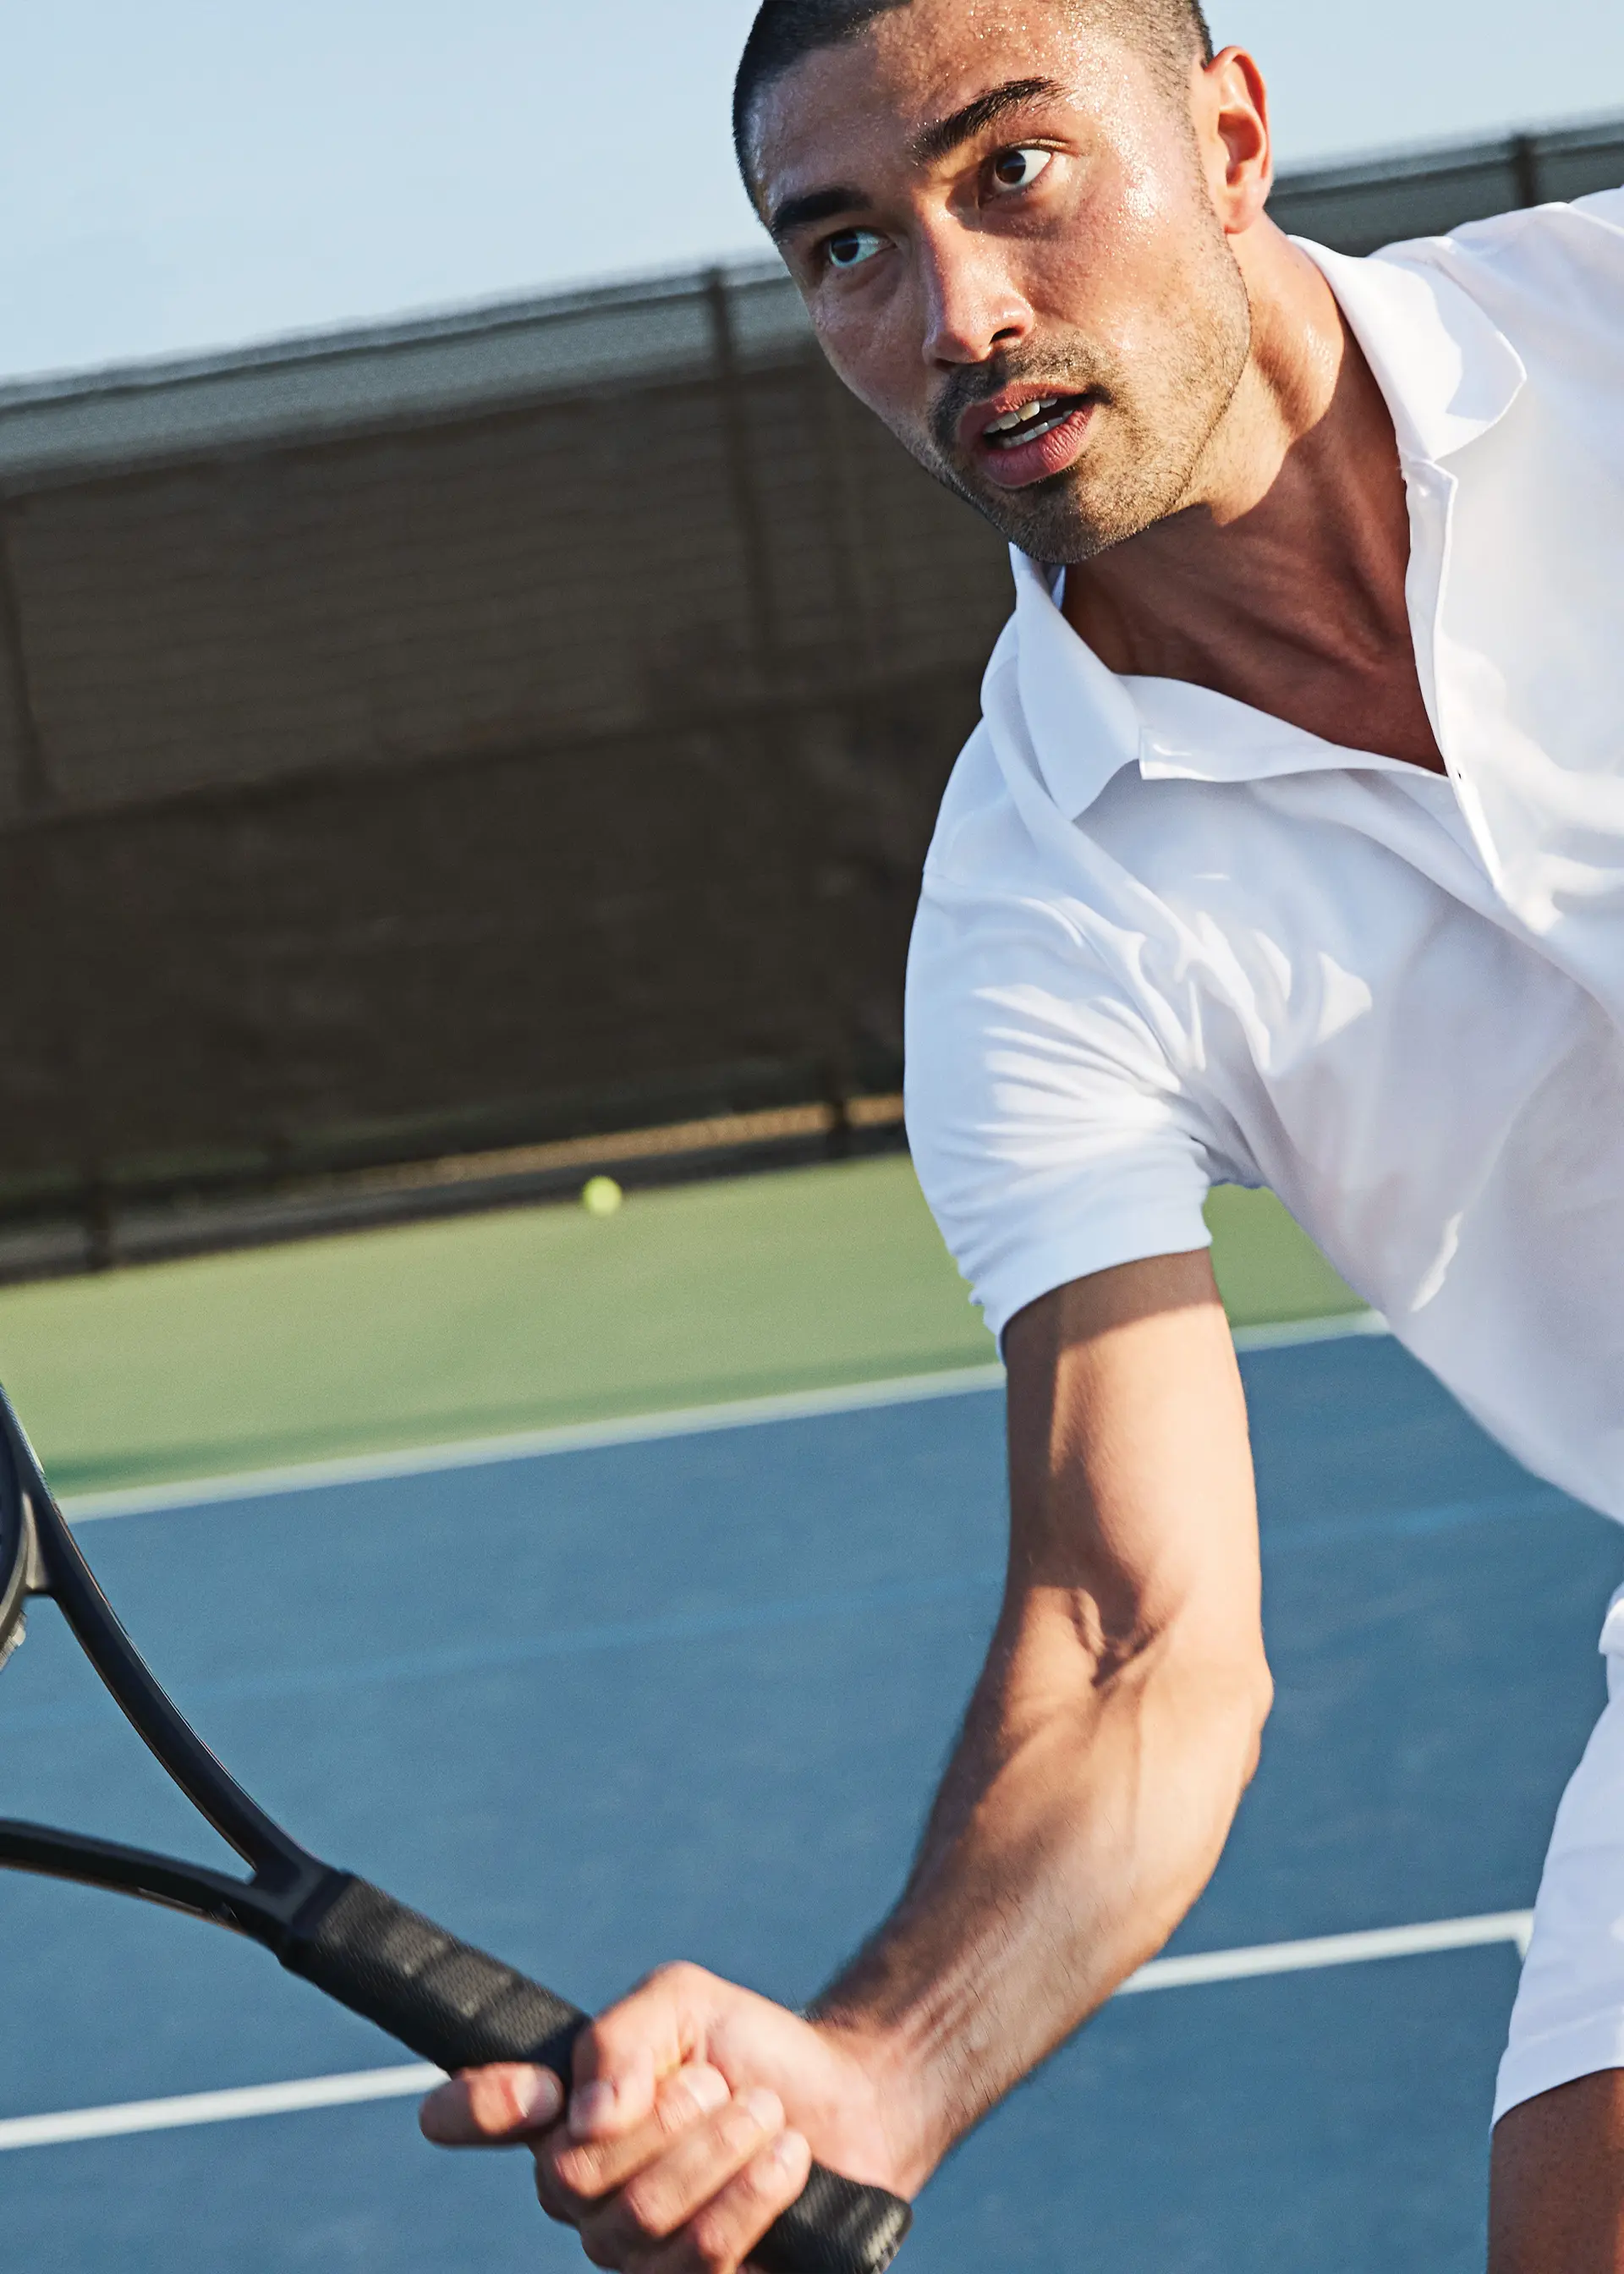 A man wearing a white tennis shirt and holding a tennis racket.